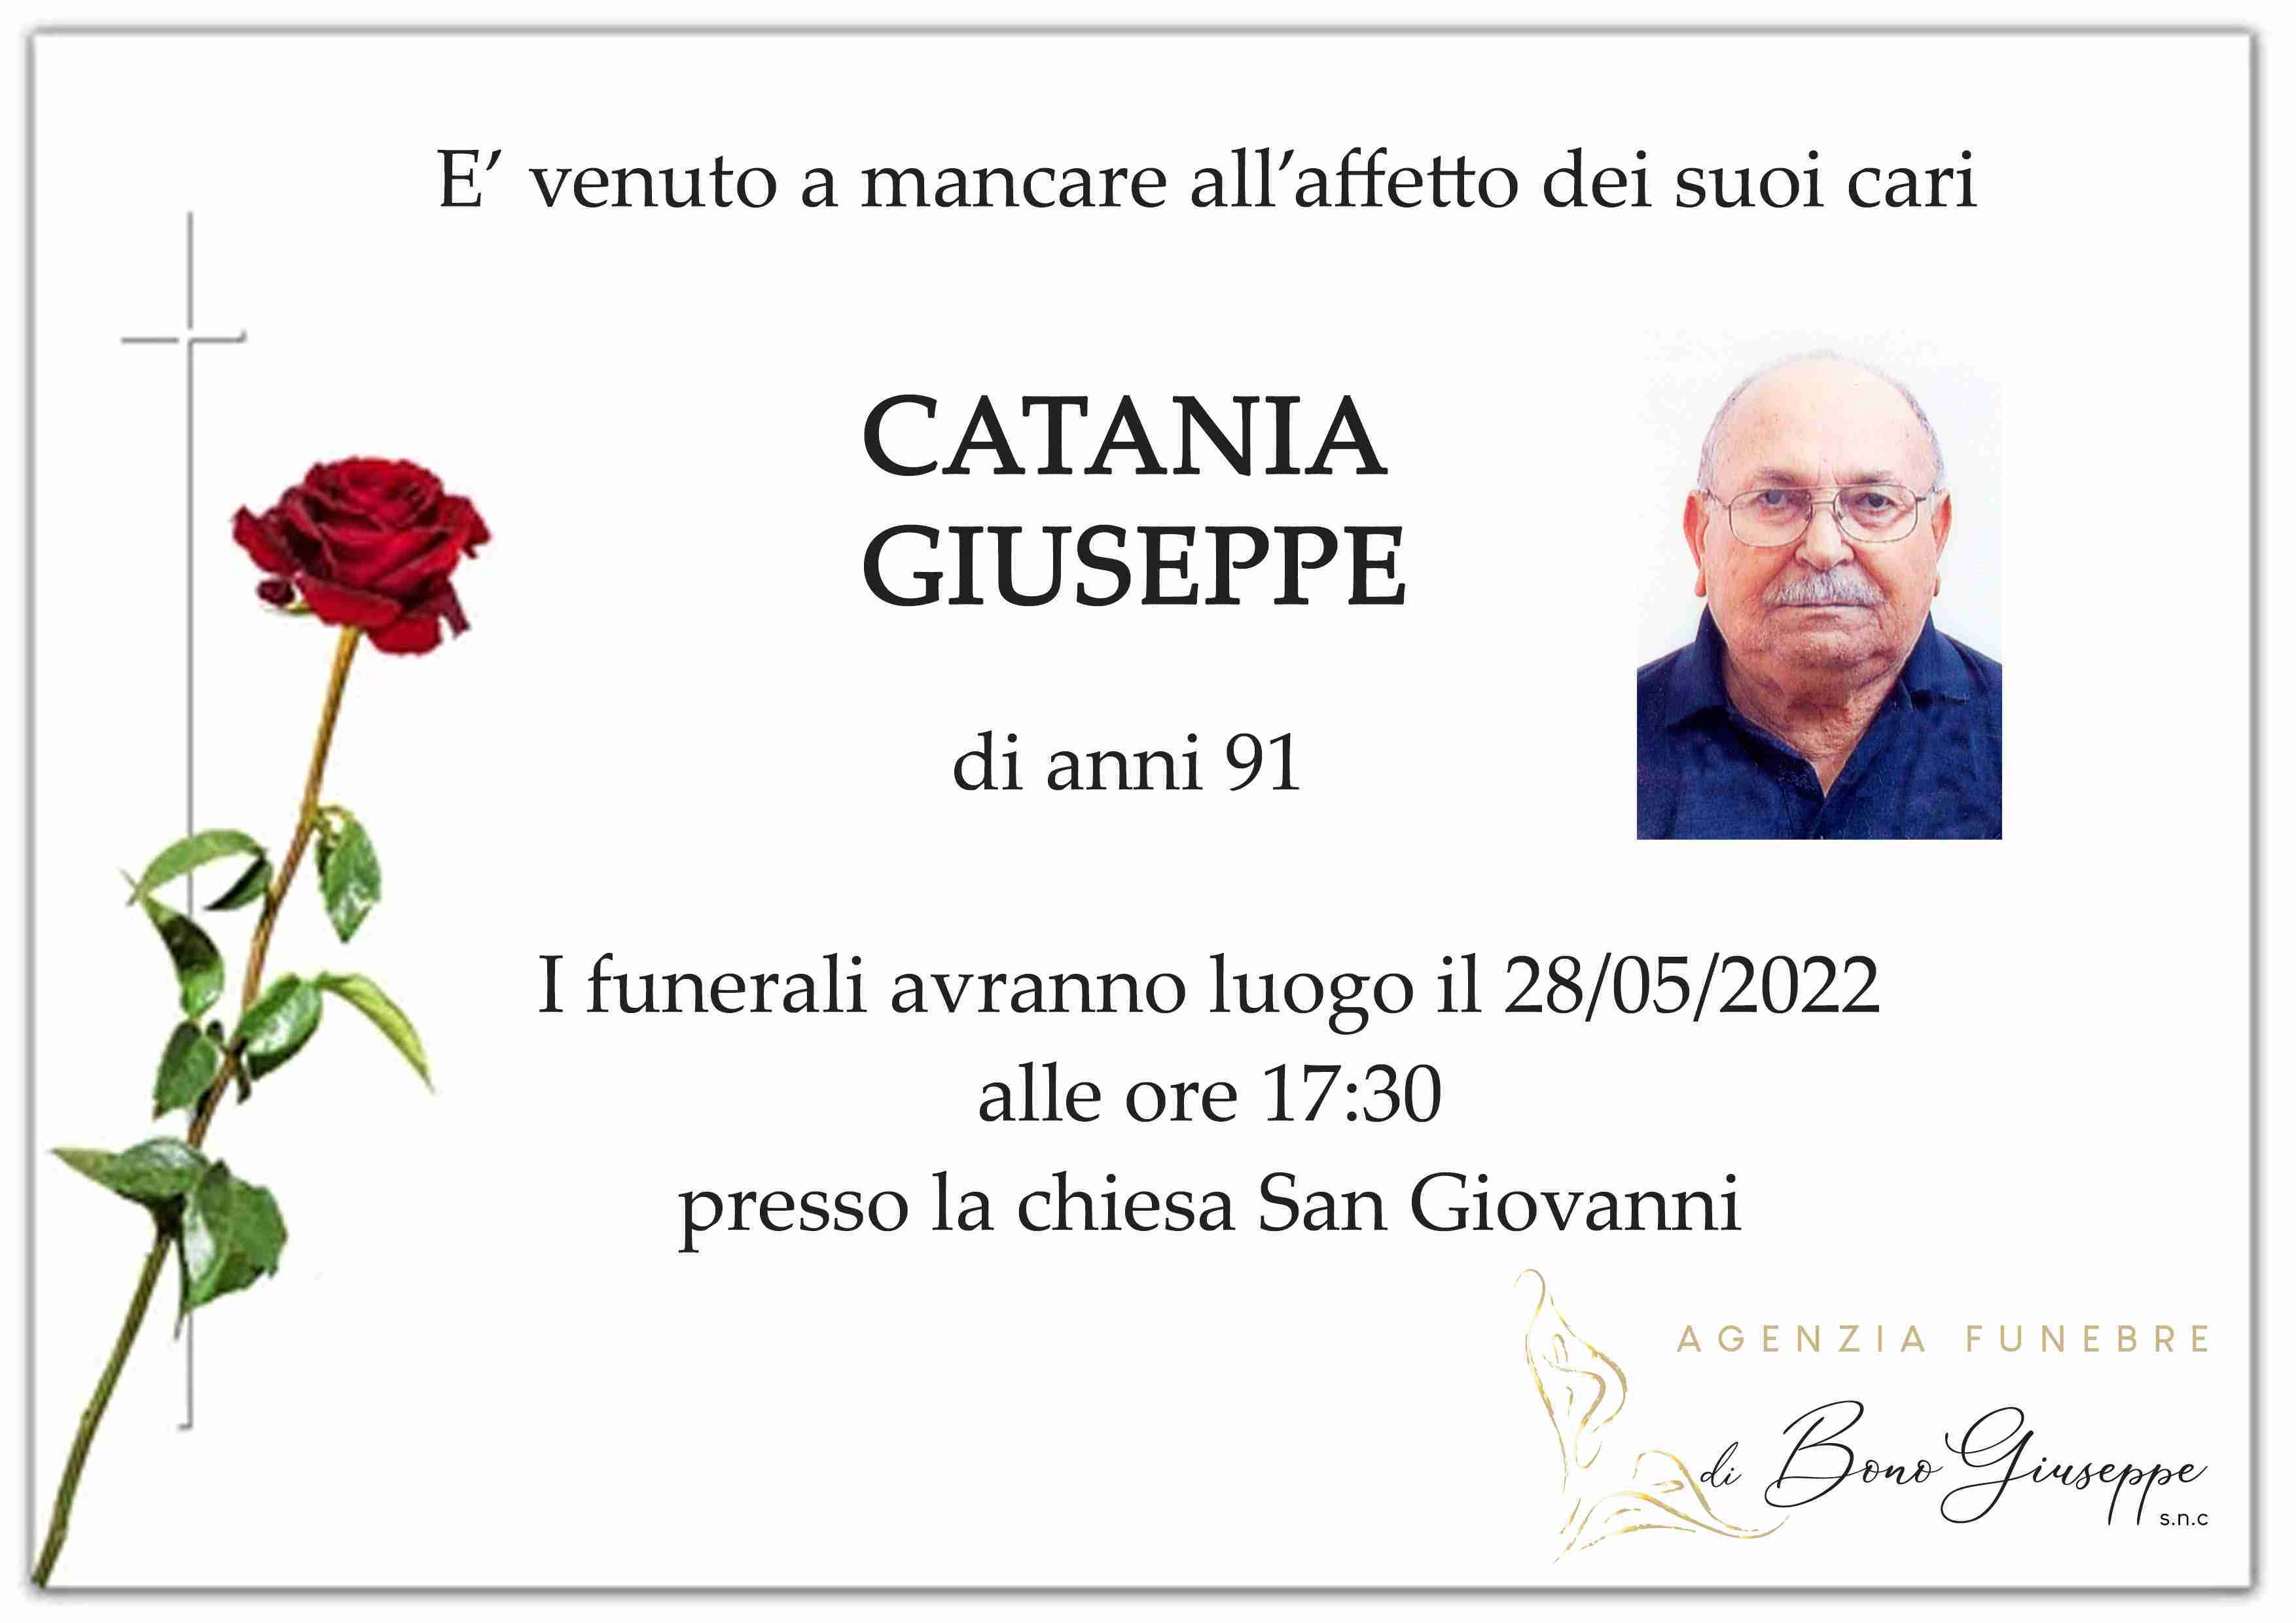 Giuseppe Catania